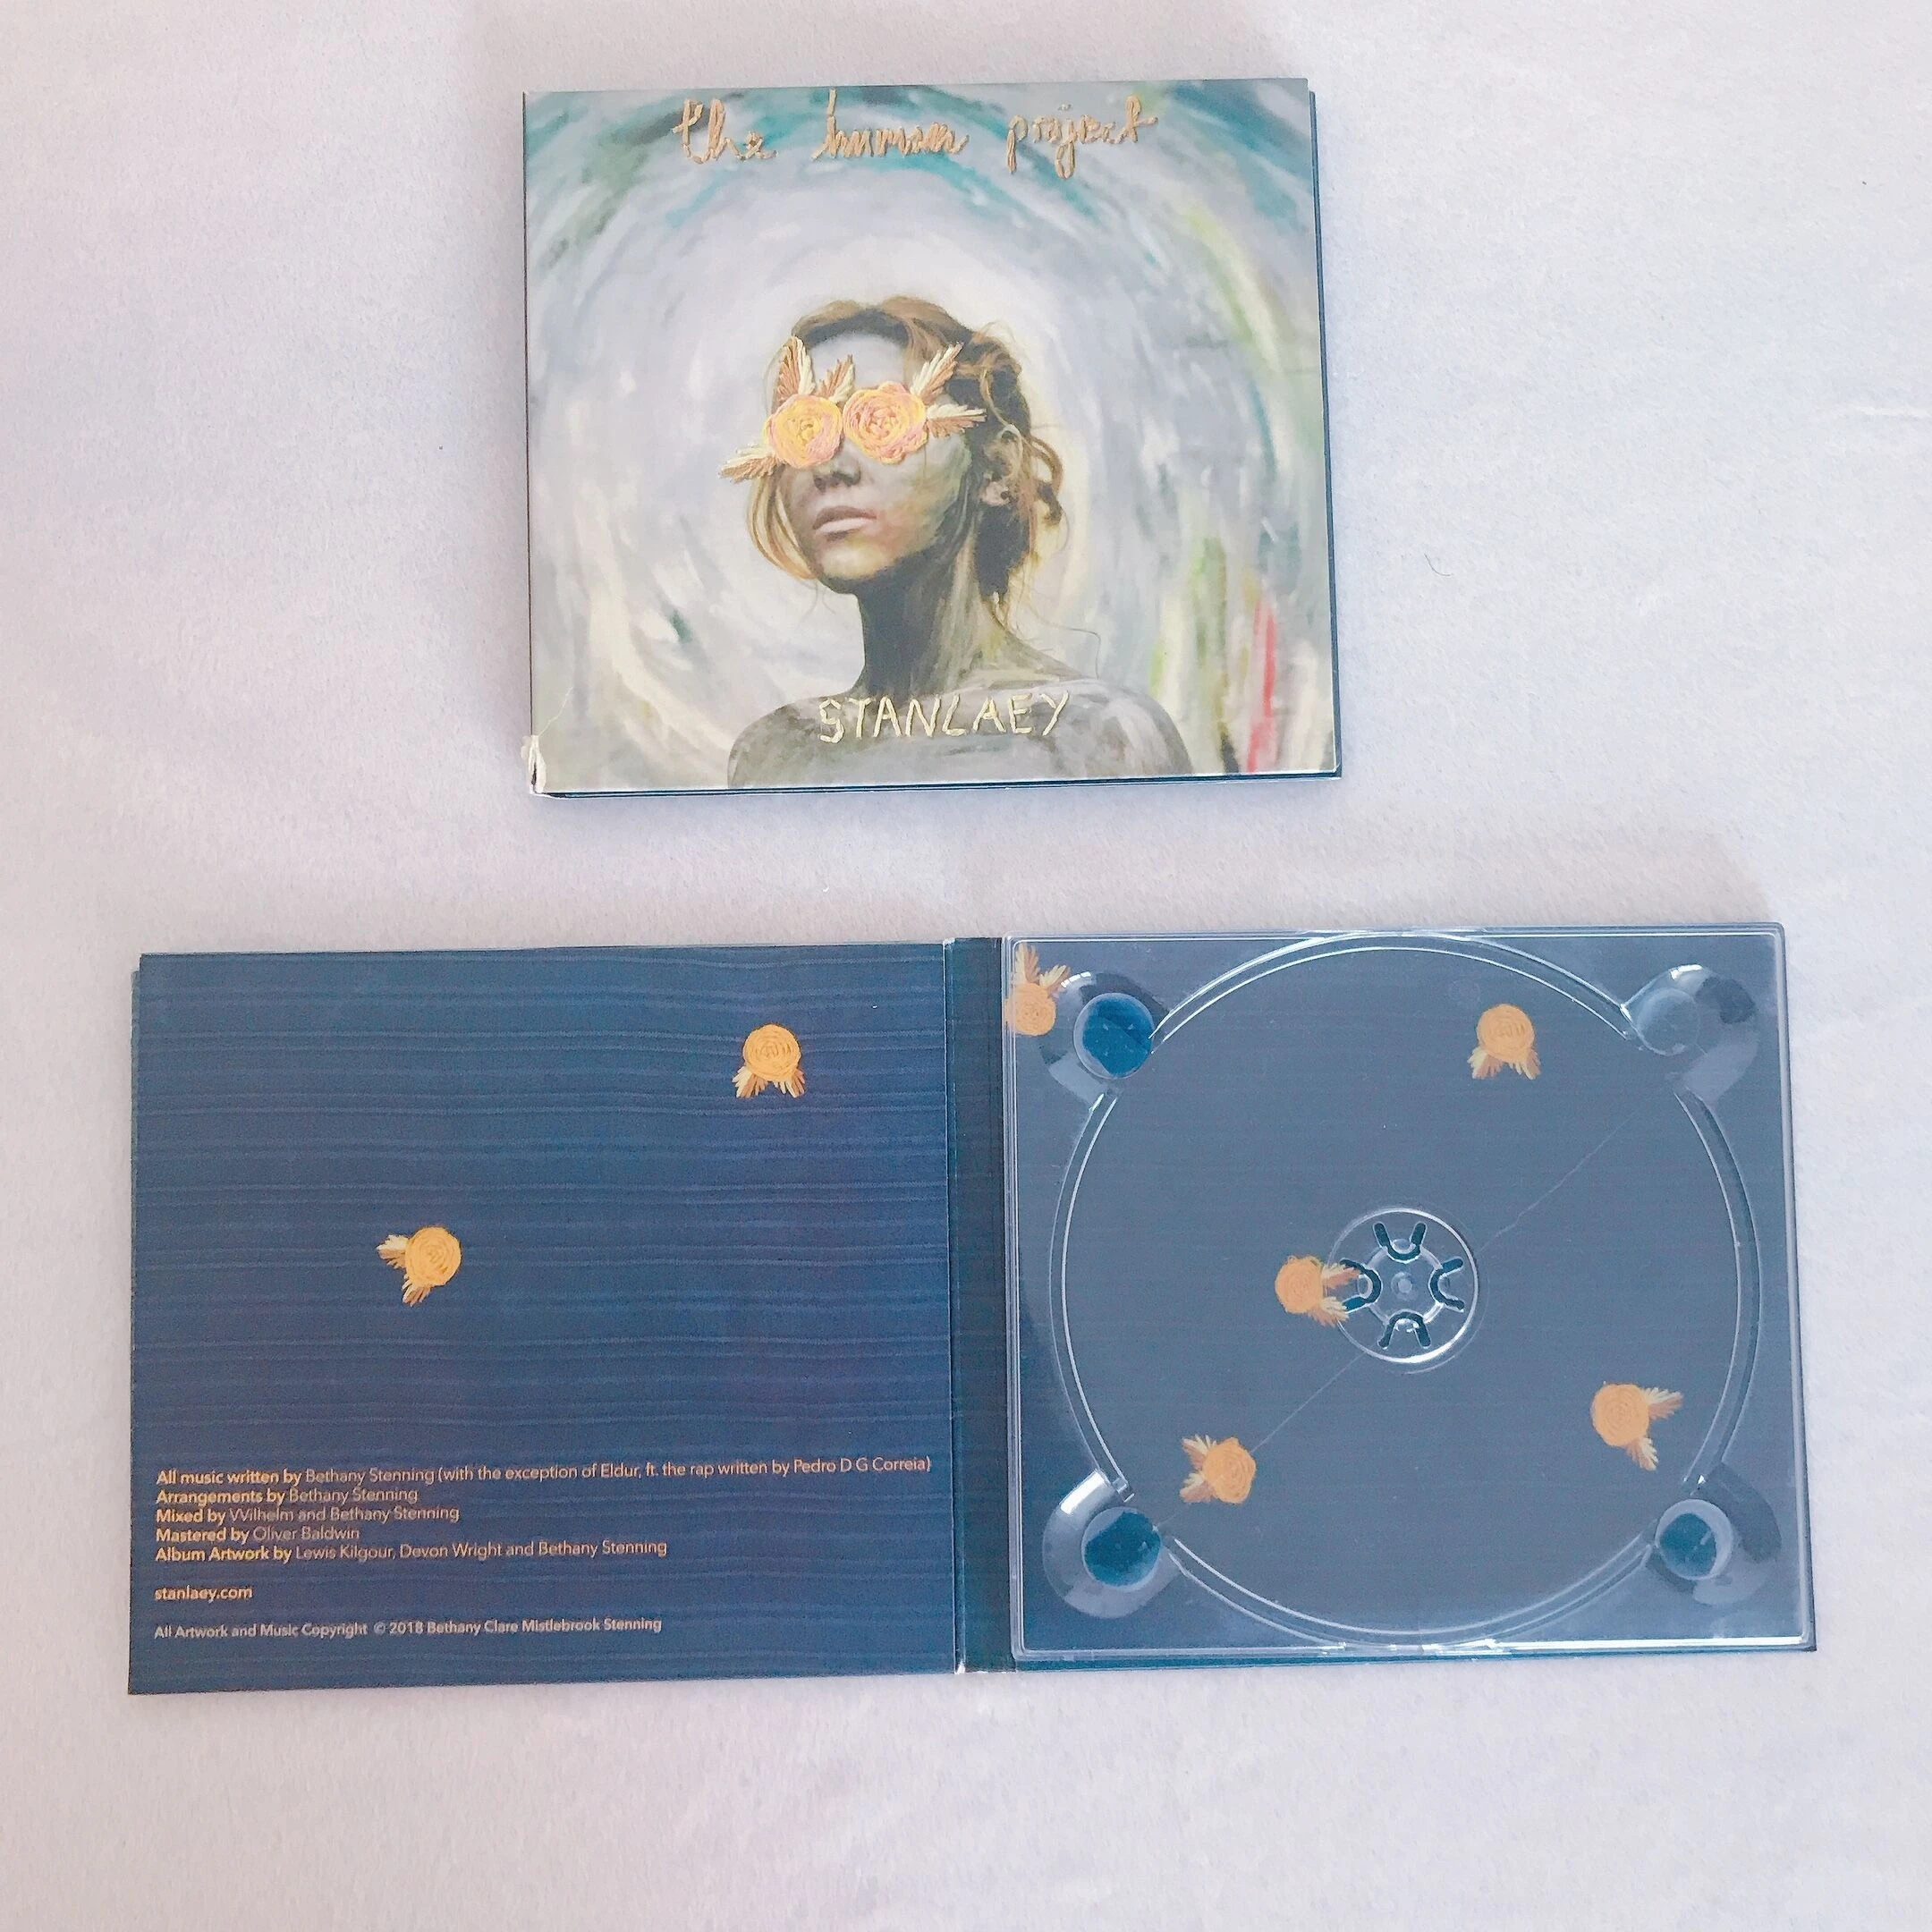 Digipak Packaging Professional Album CDG CD DVD Disc Replication